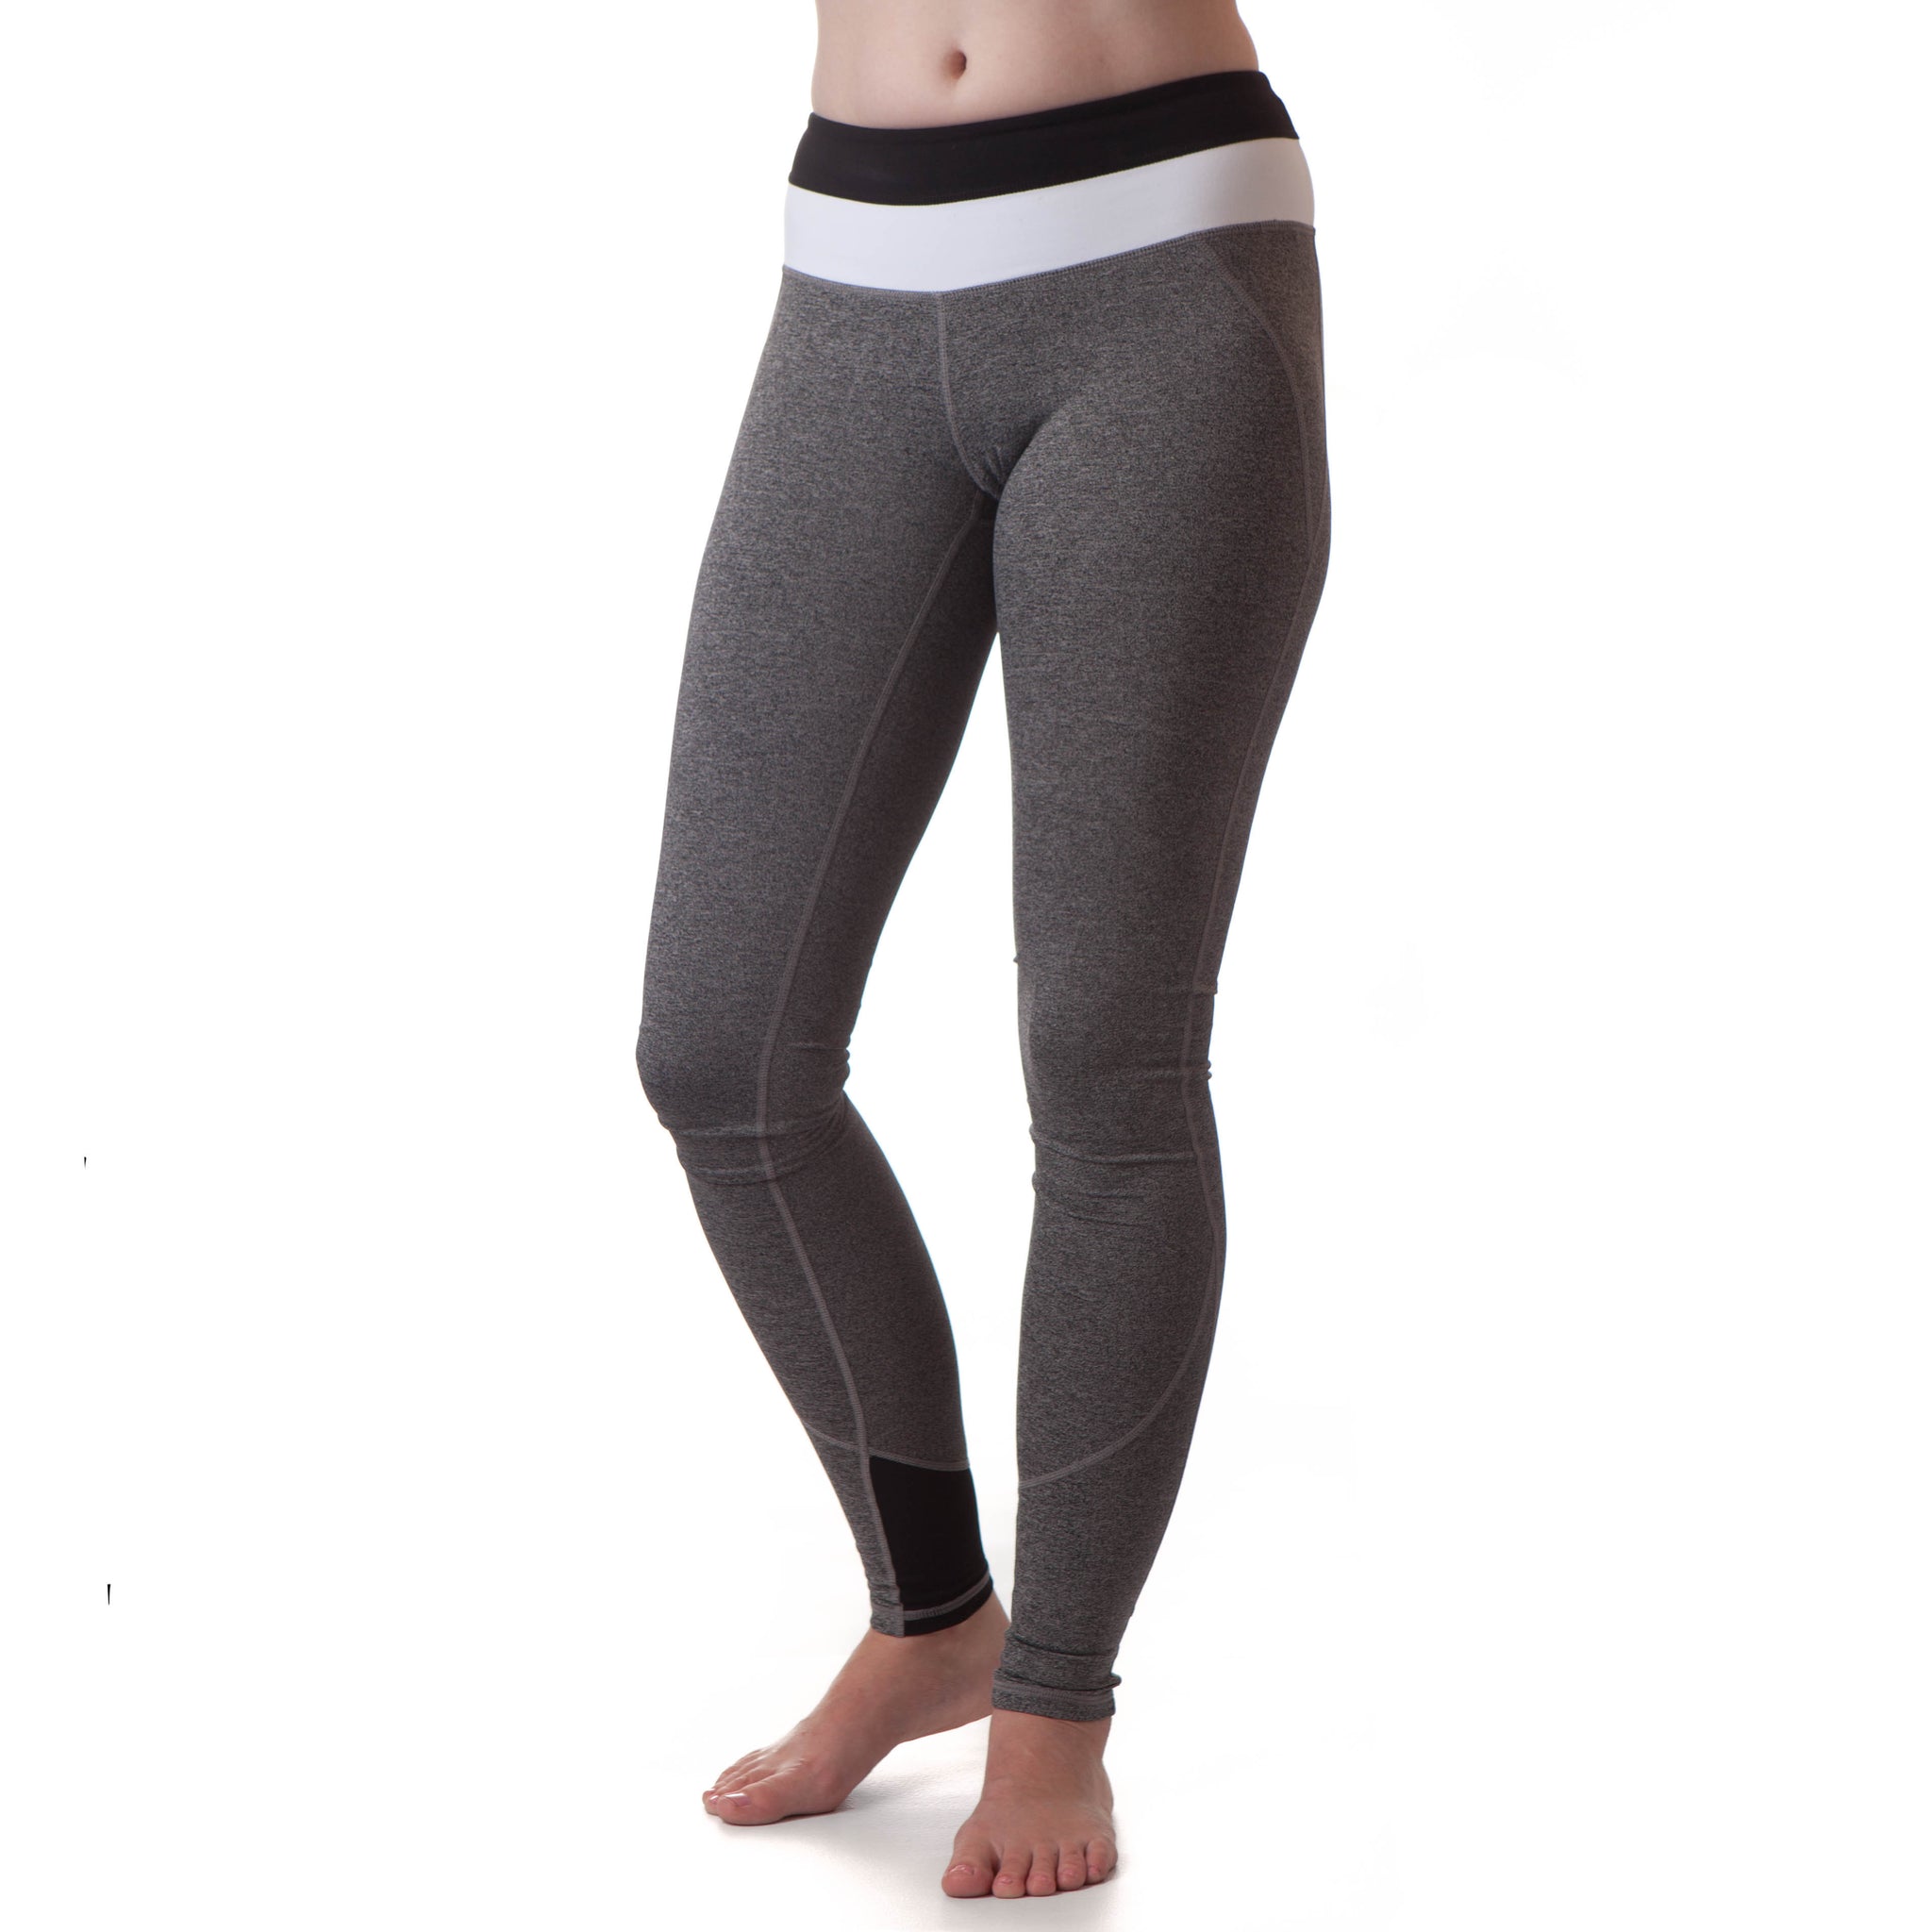 Extra Long Yoga Pants for Tall Women (Black/White) - Kindfolk Athletics